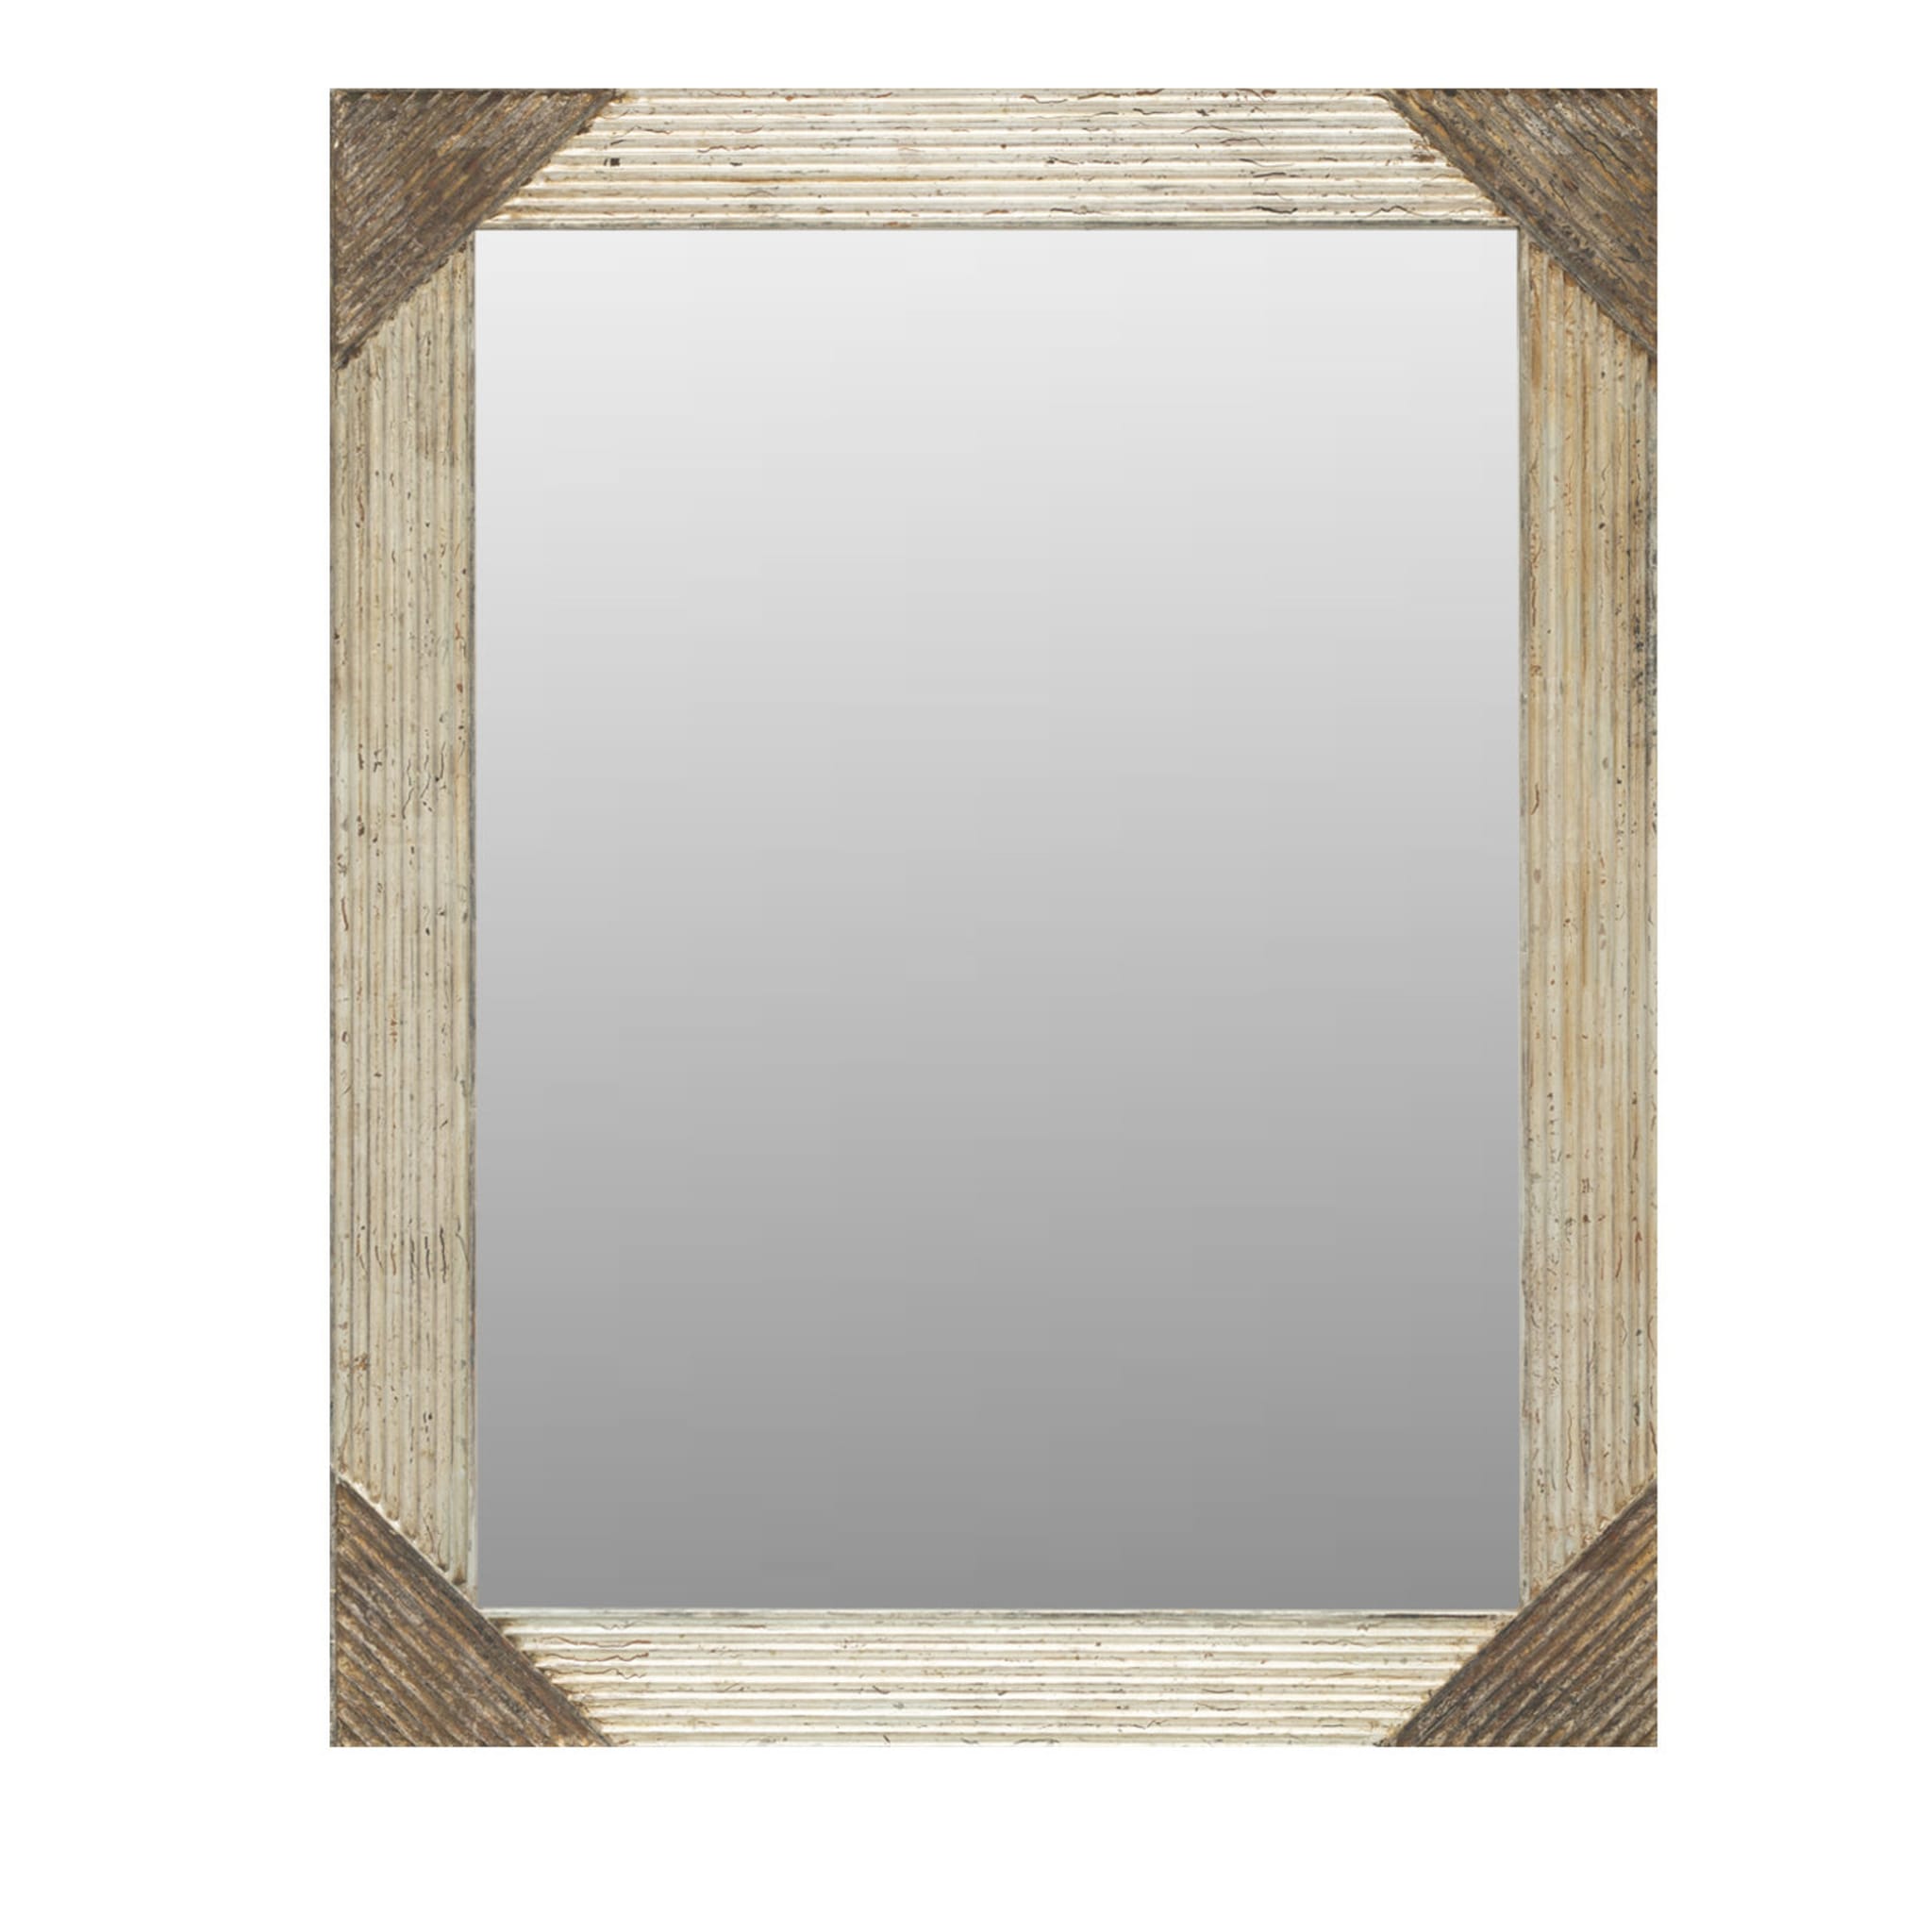 Decò Fiorentino Wall Mirror - Main view